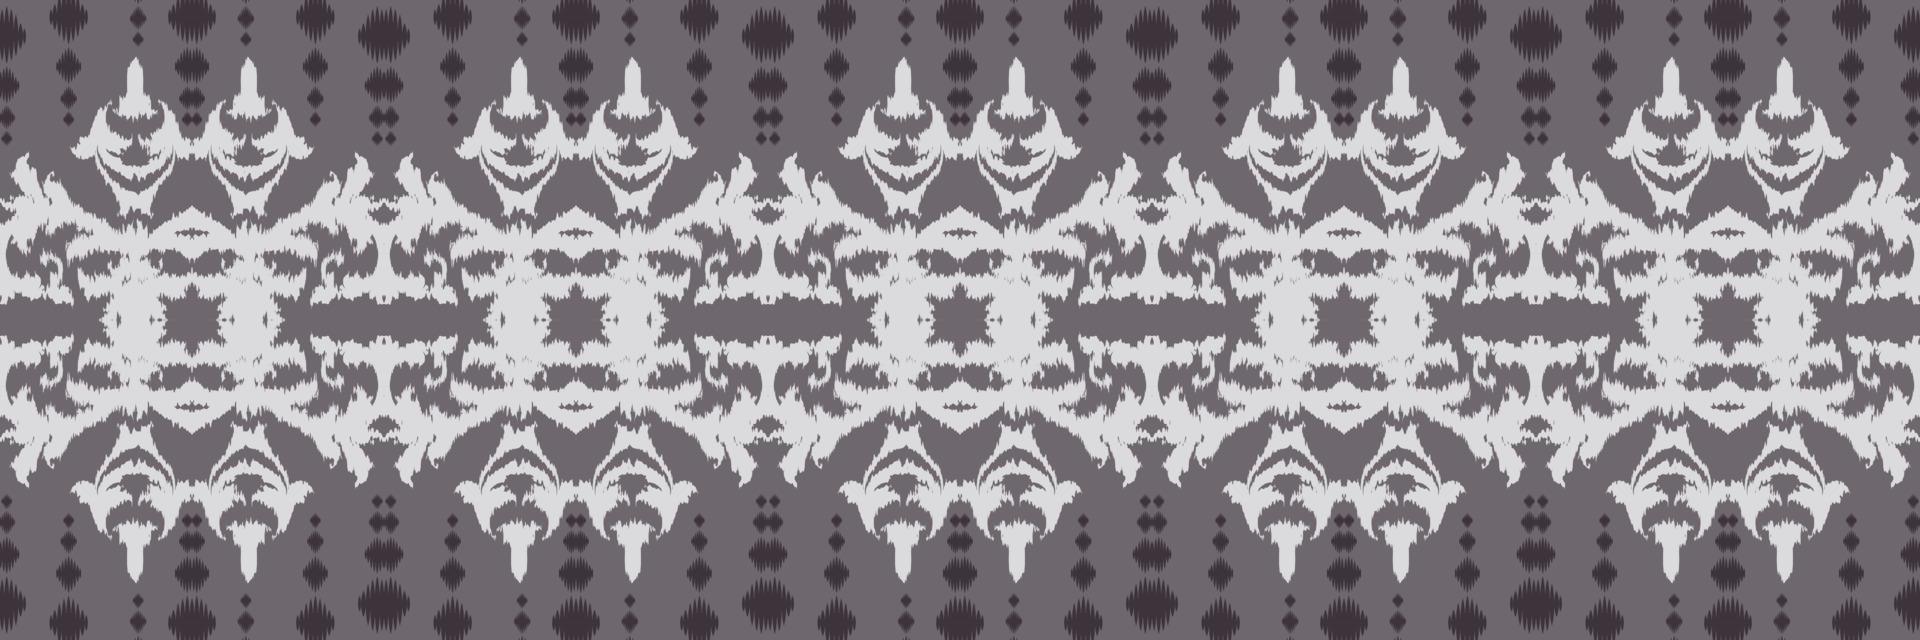 estampas étnicas ikat batik têxtil padrão sem costura design de vetor digital para impressão saree kurti borneo tecido borda pincel símbolos amostras elegantes